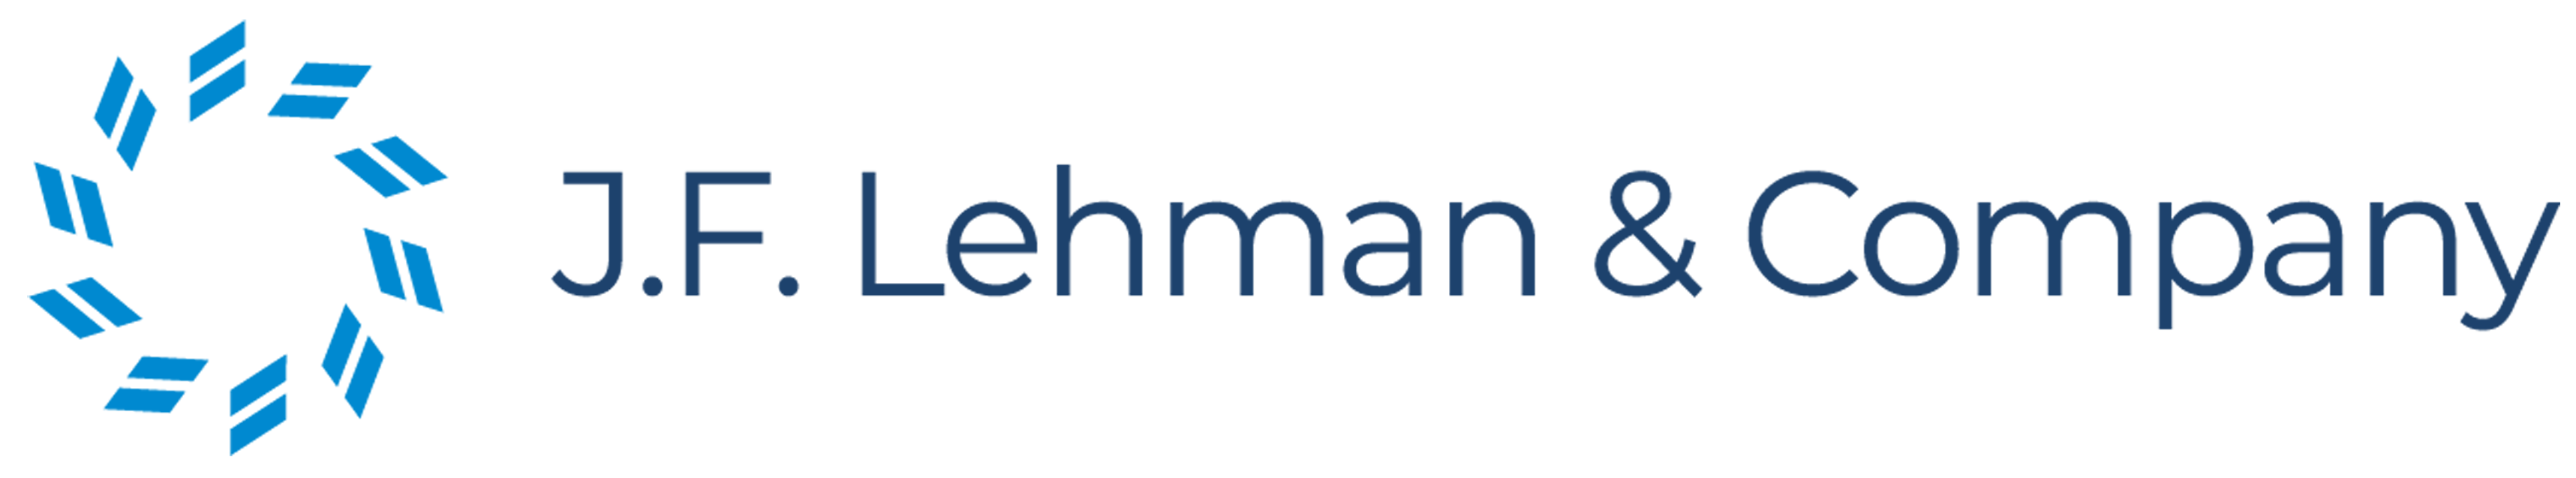 J.F. Lehman & Company Announces Promotions, July 26 2016